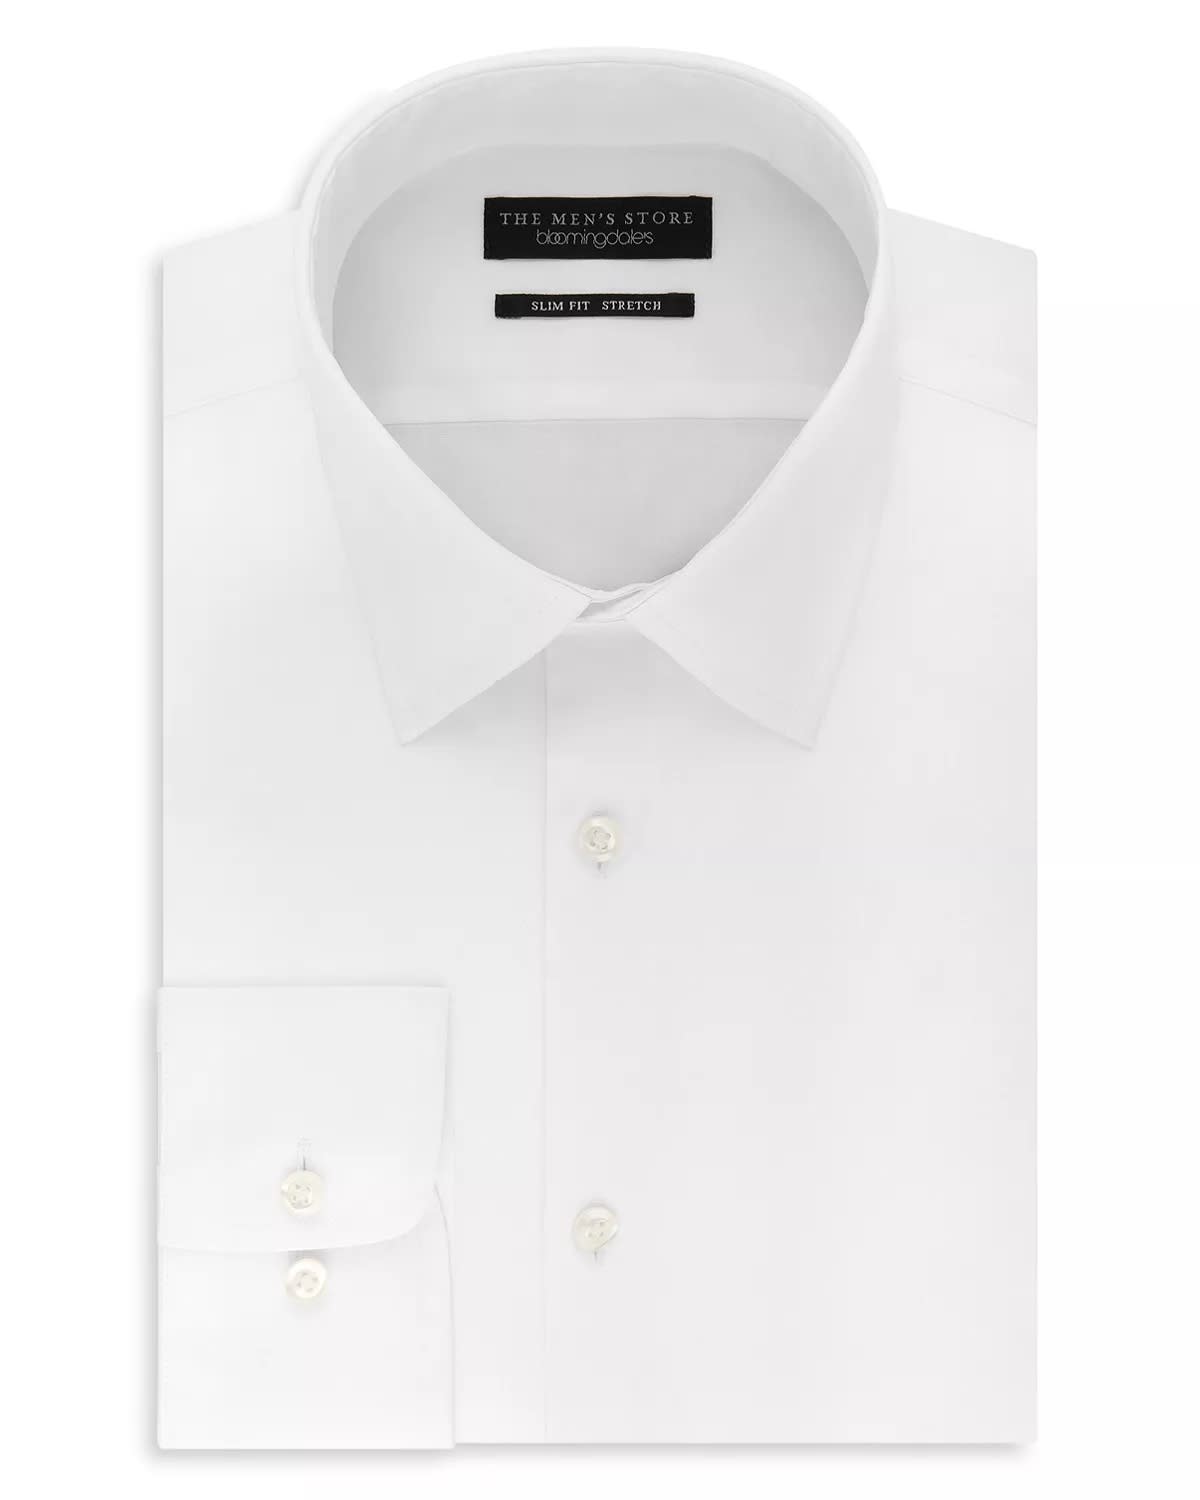 best white dress shirt, Bloomingdale's dress shirt